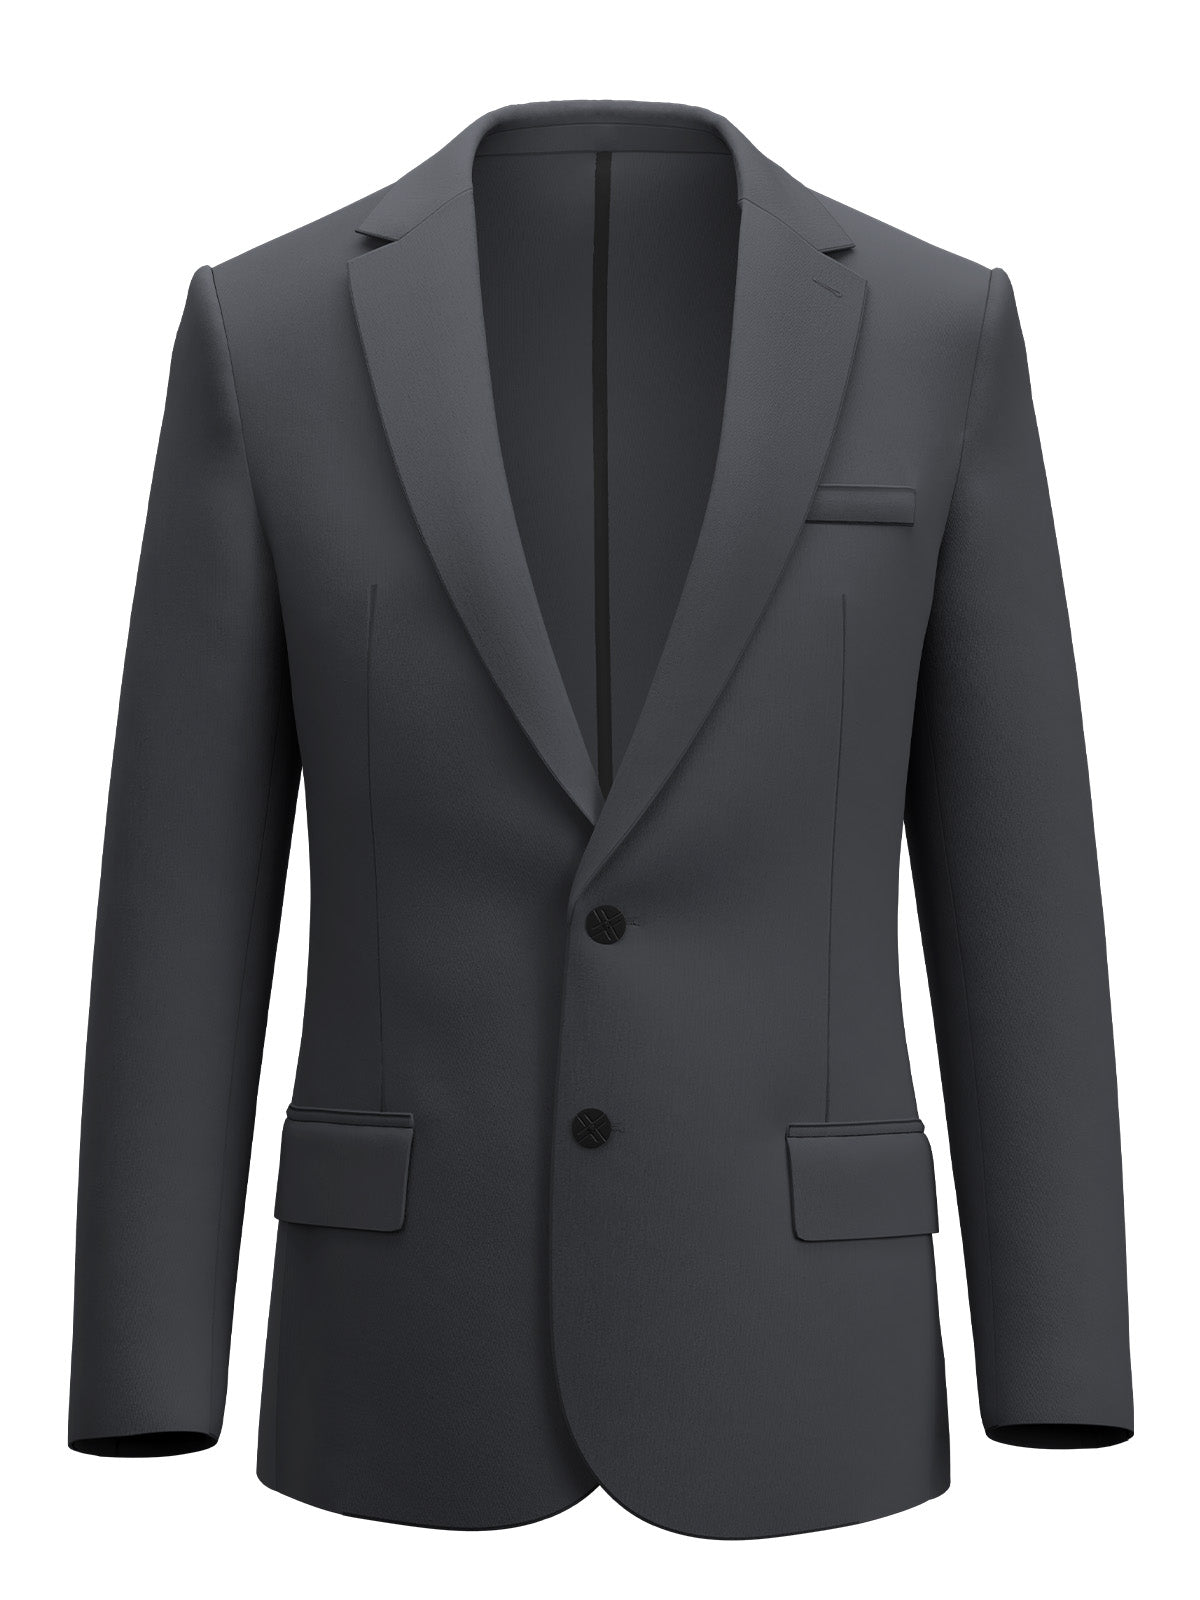 xJacket Air - Grey  Ultra Lightweight Men's Suit Jacket